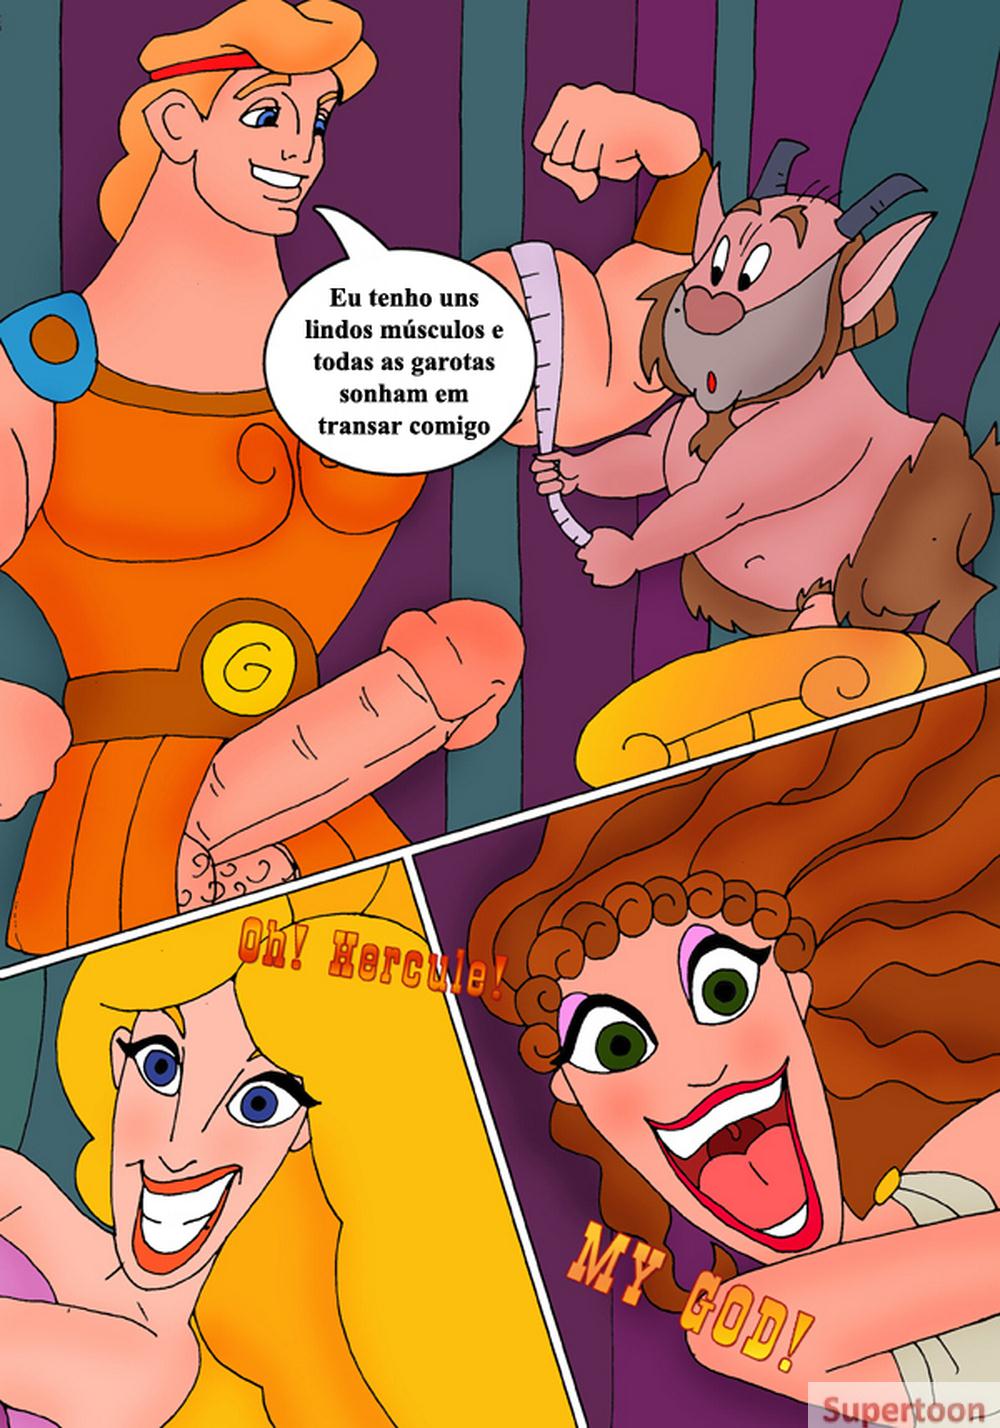 HQ Erótico - Aventuras sexuais de Hercules - Disney Porno